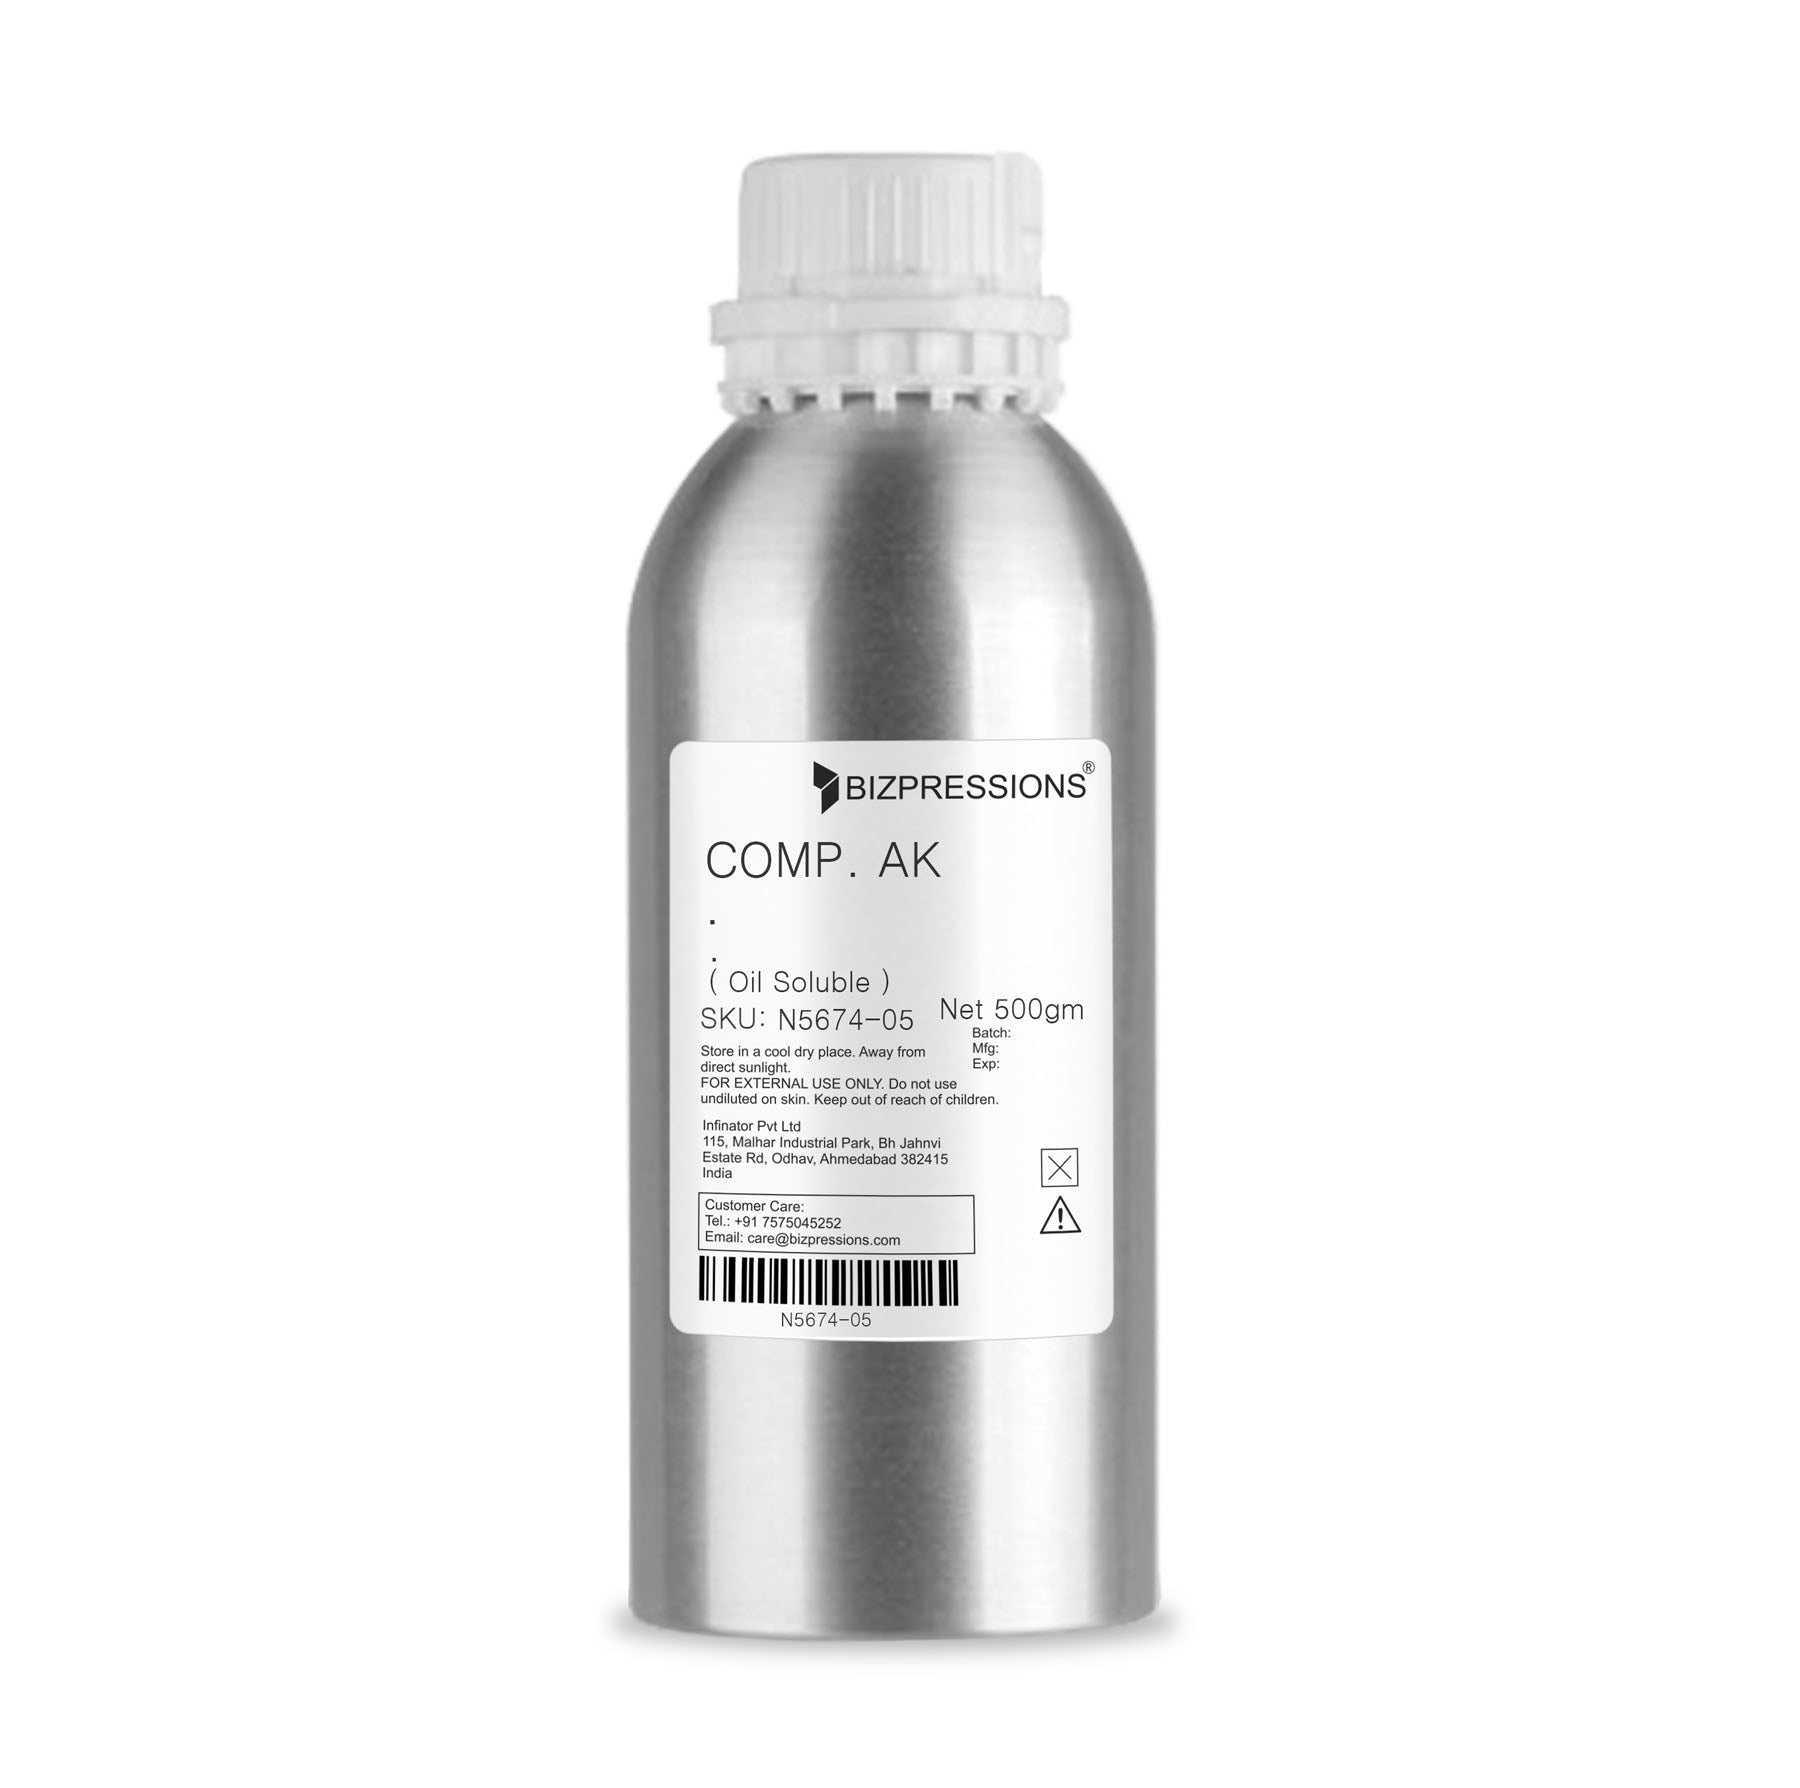 COMP. AK - Fragrance ( Oil Soluble ) - 500 gm